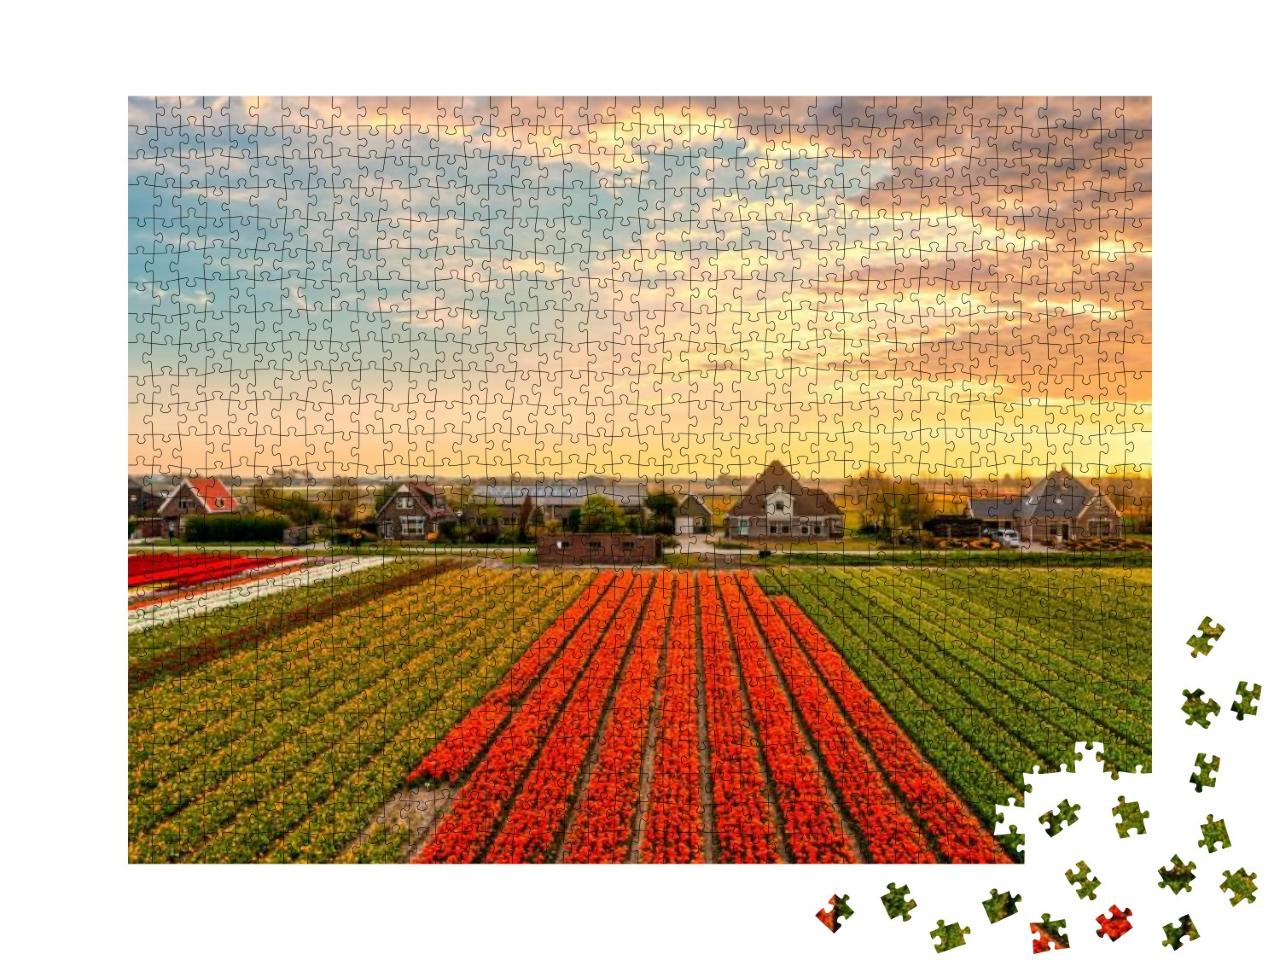 Puzzle 1000 Teile „Tulpenfarm mit Tulpenfeldern bei Sonnenuntergang, bewölkter Himmel“